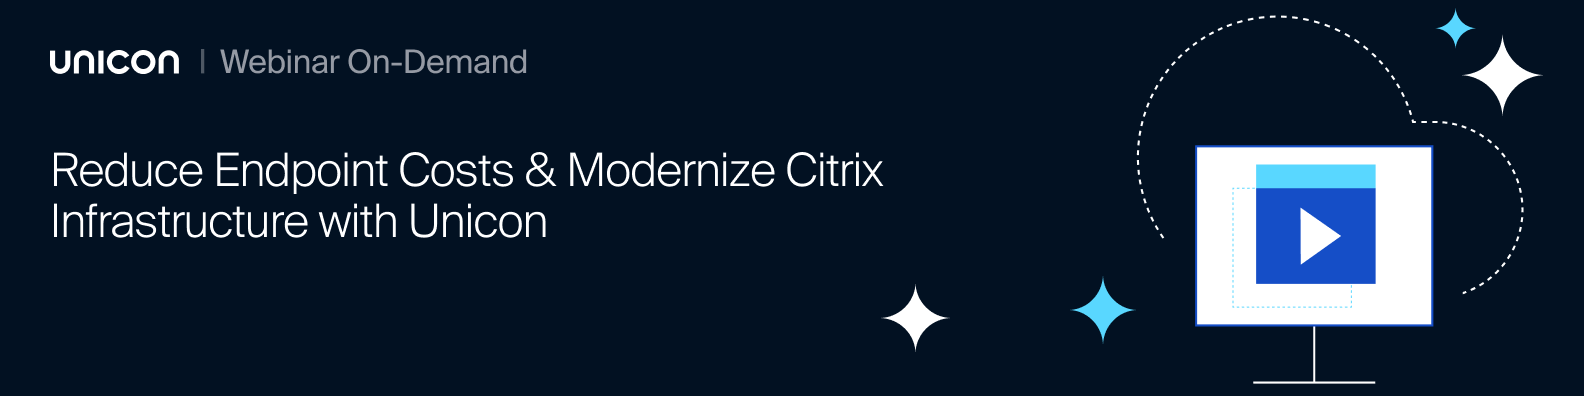 Citrix Customer on demand